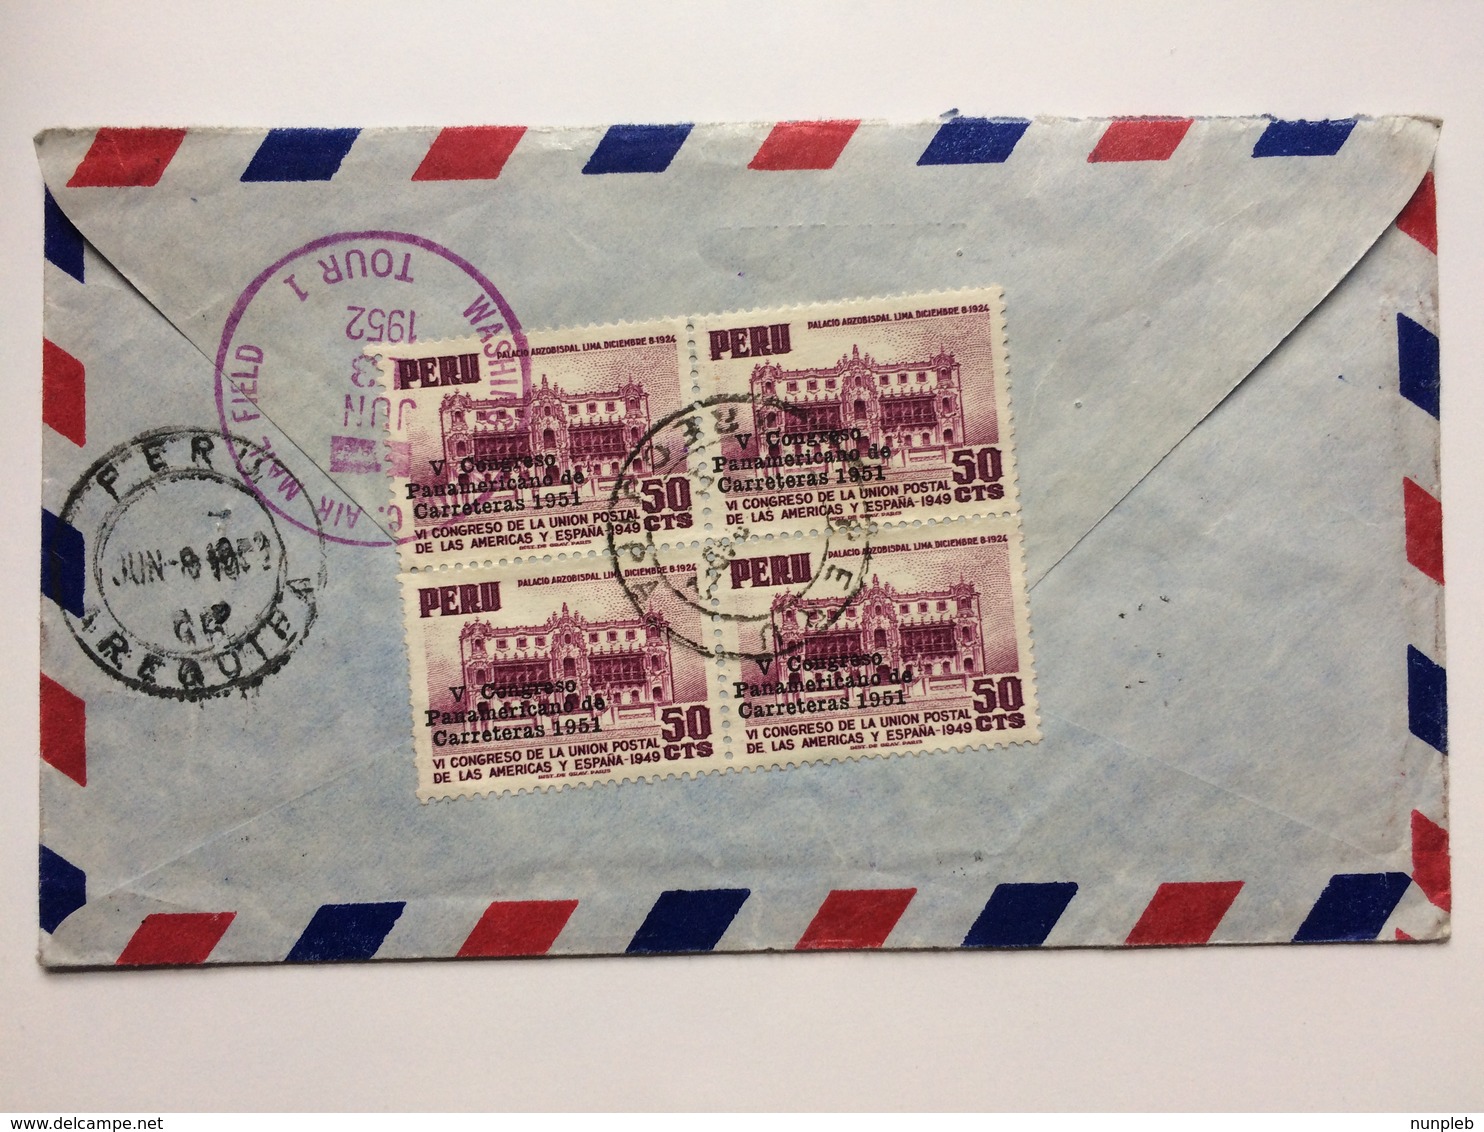 PERU - 1952 Air Mail Cover To England With Purple Washington Air Mail Field Transit Mark - Peru